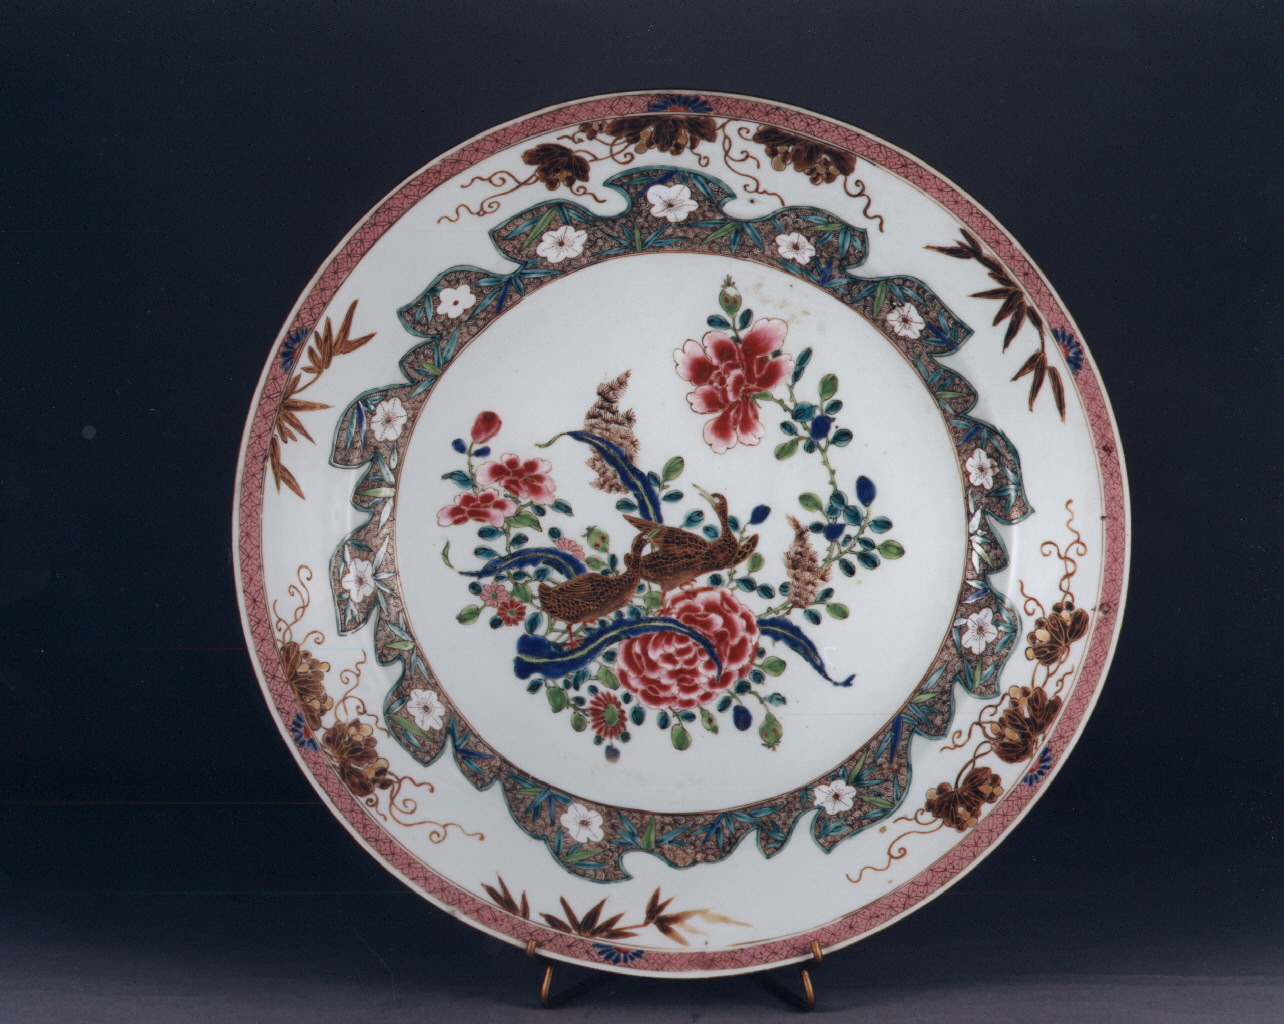 motivi decorativi floreali (piatto, serie) - manifattura cinese (sec. XVIII)